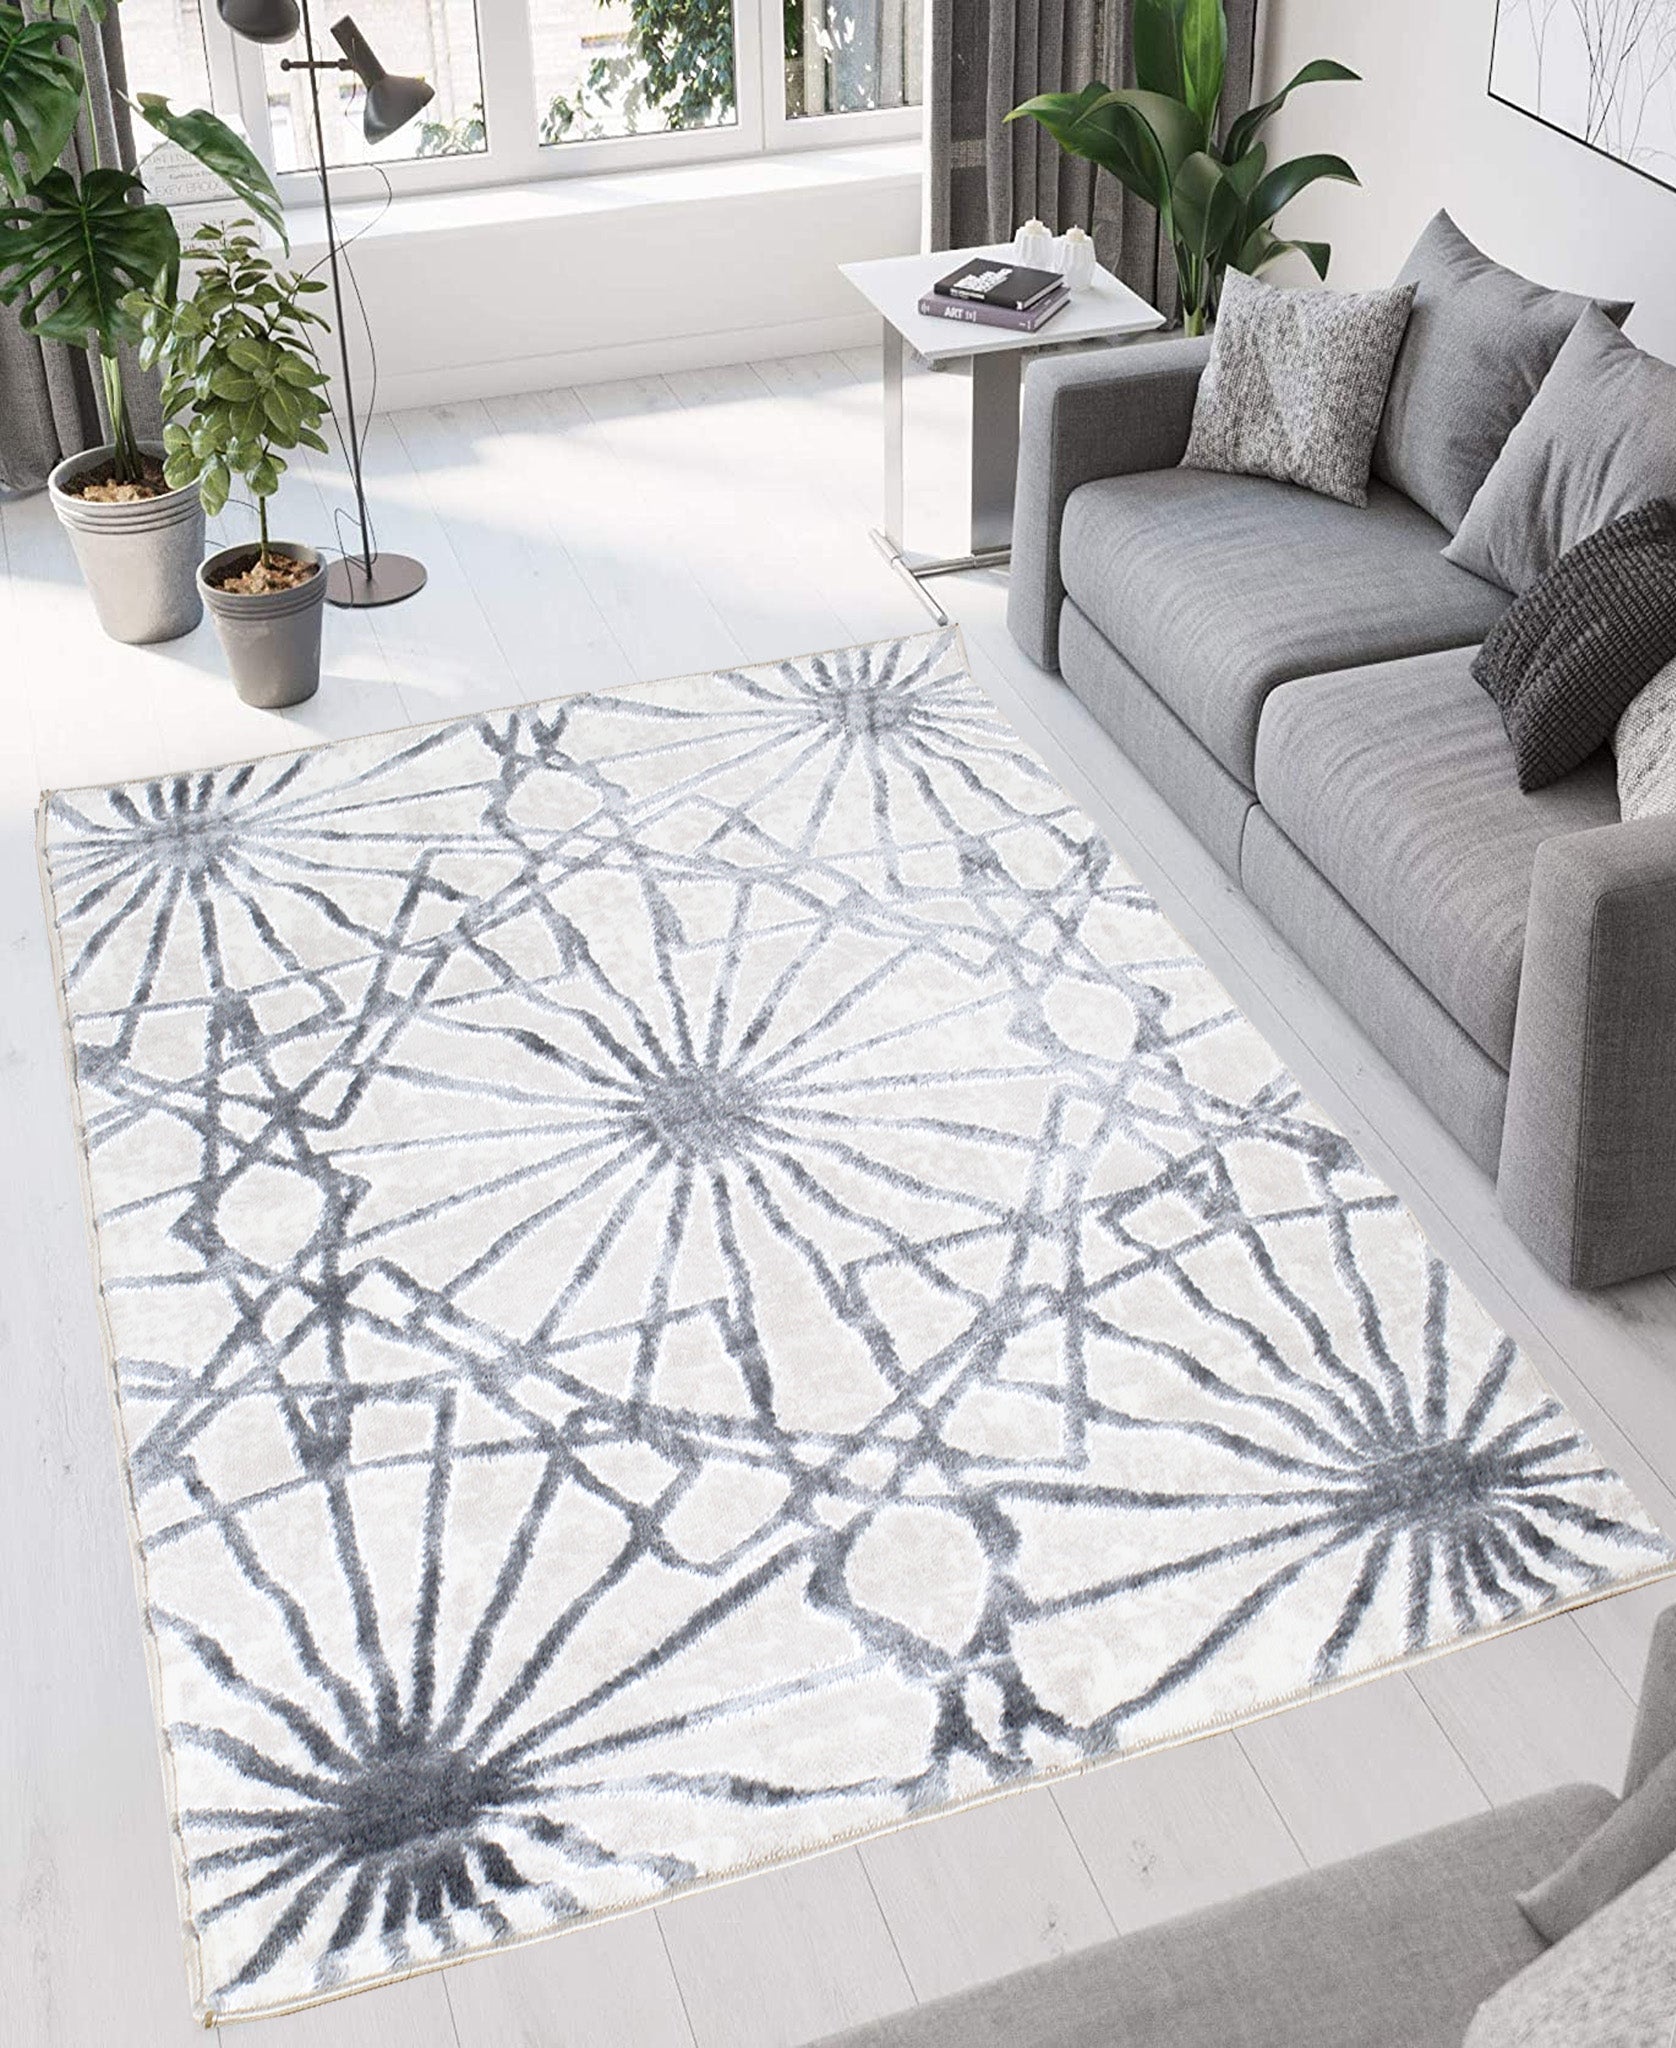 Konya Abstract Carpet 500mm X 800mm - Grey